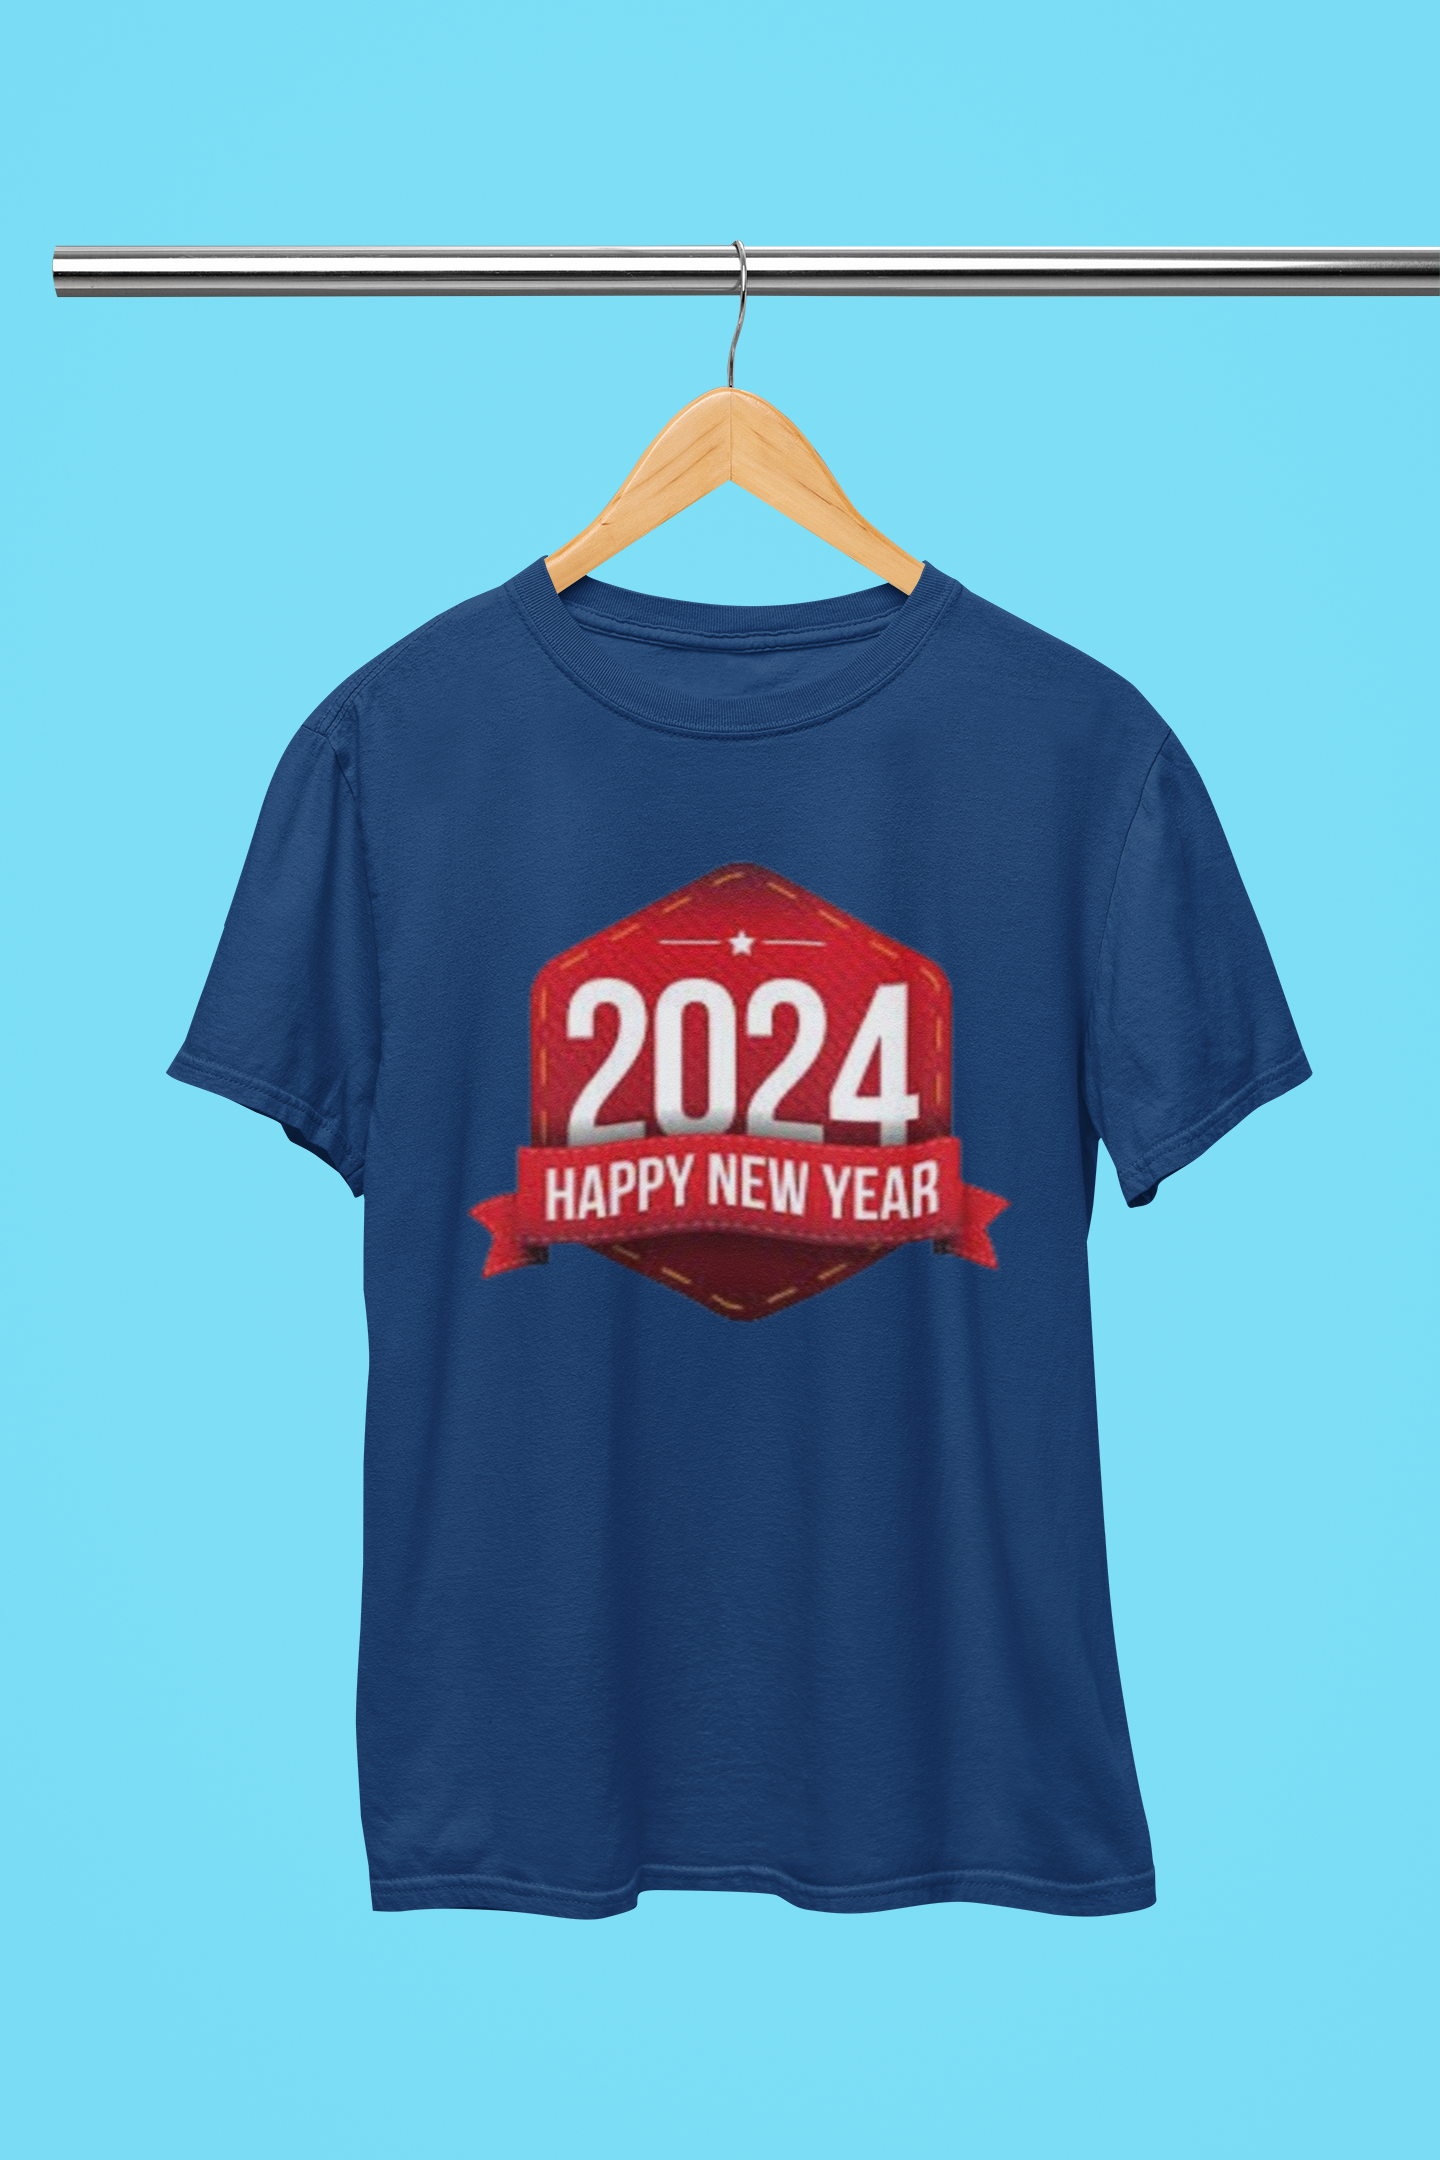 HAPPY NEW YEAR 2024 T-SHIRT